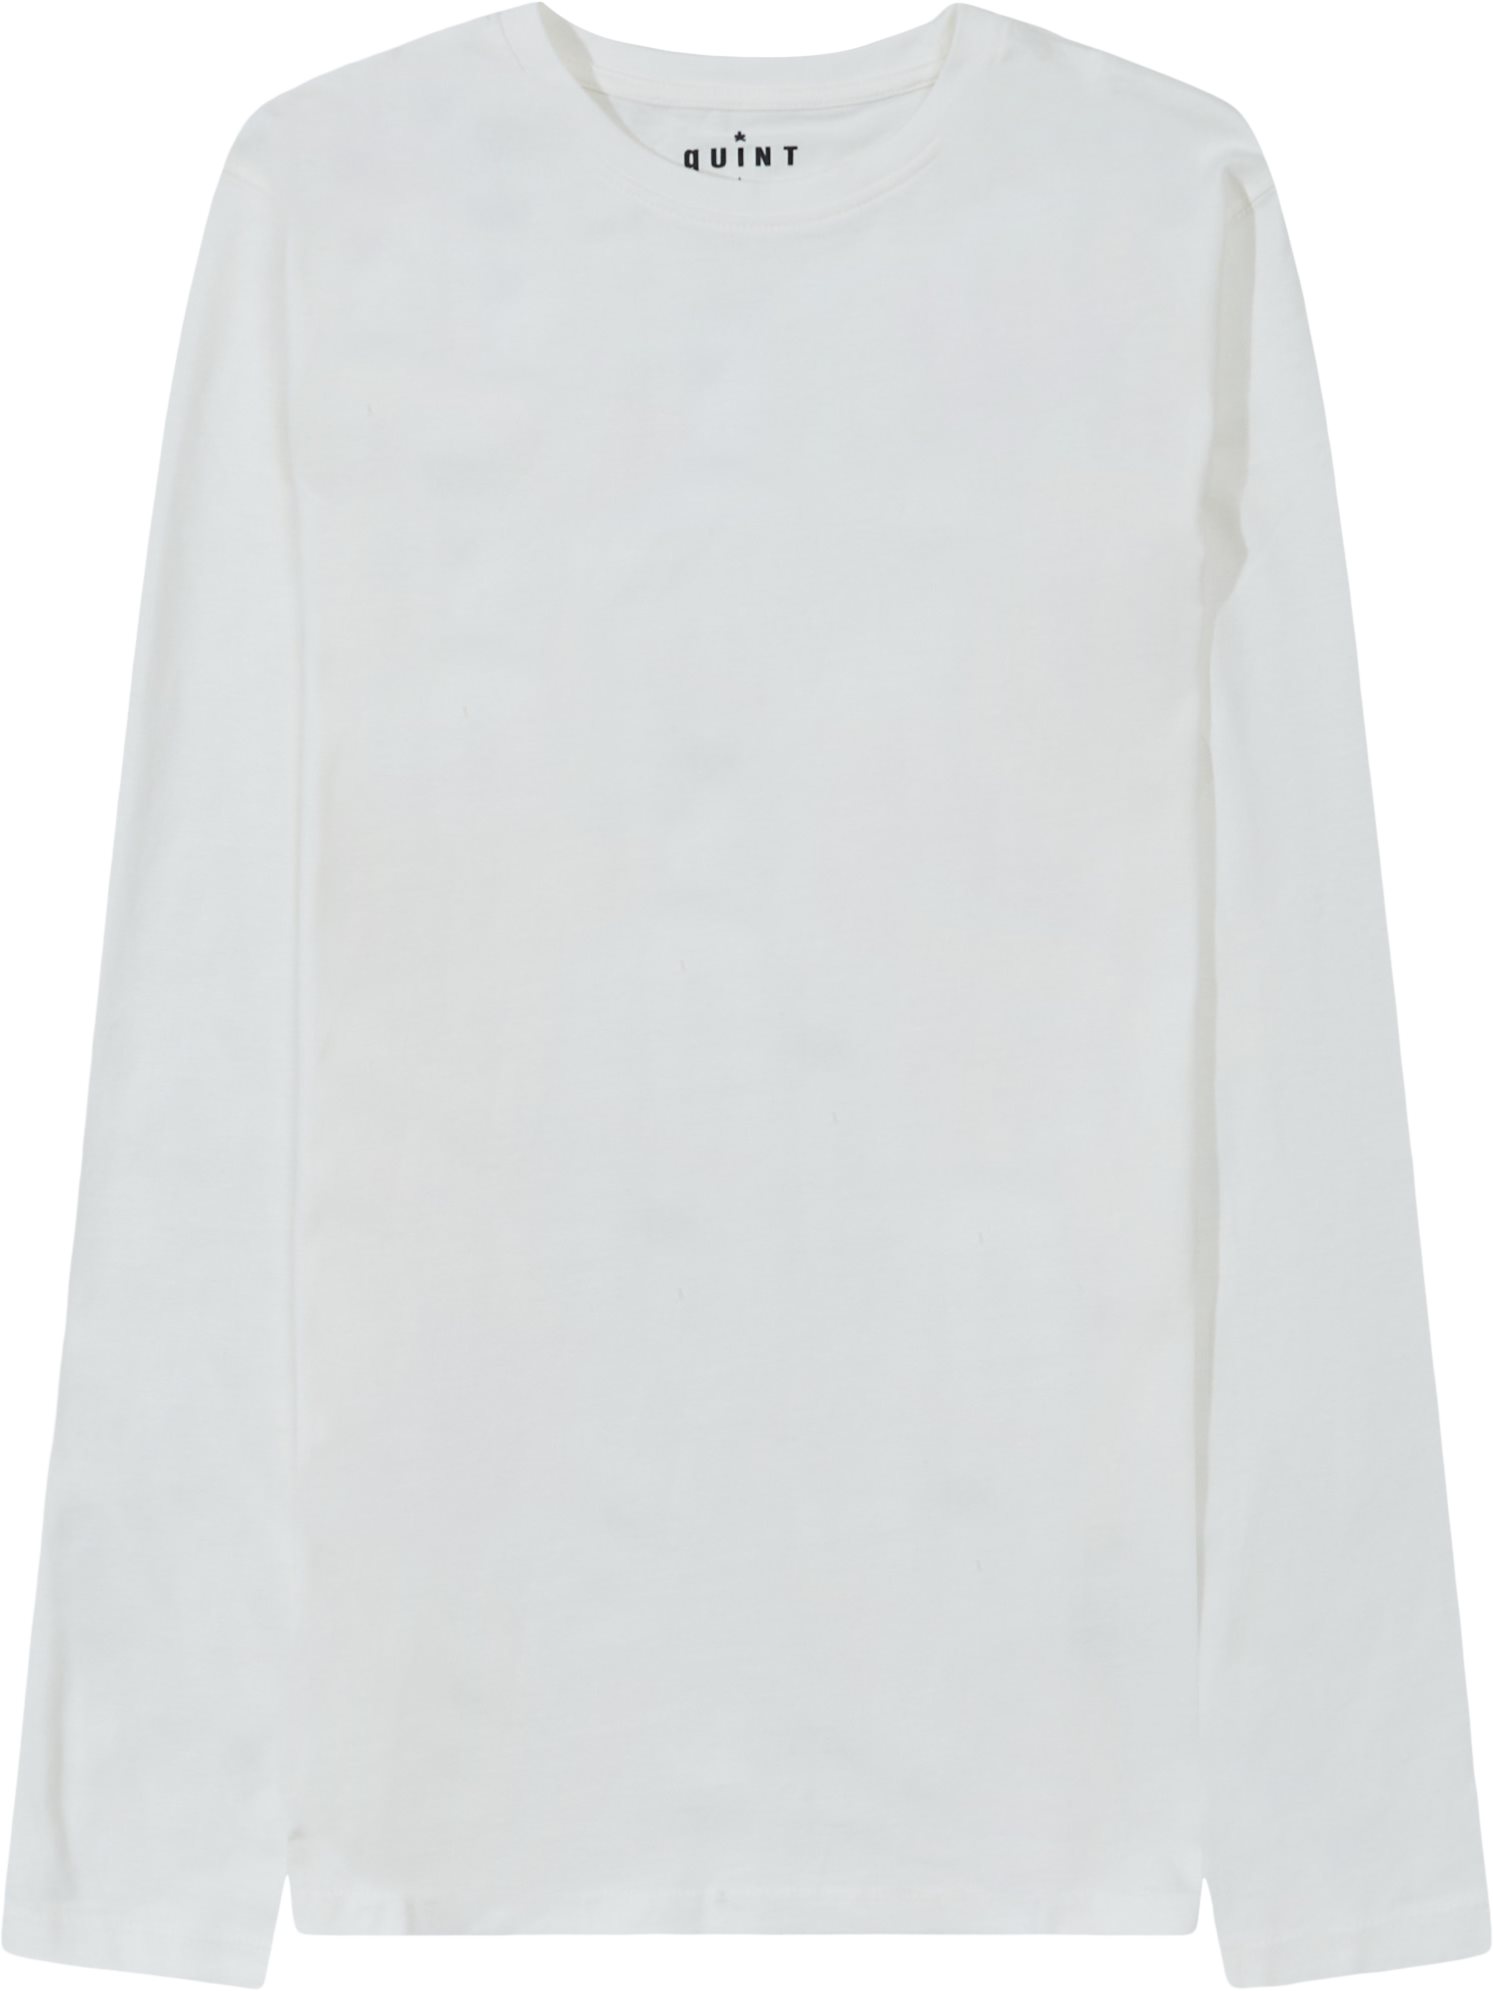 Ray Long Sleeve Tee - T-shirts - Regular fit - Sand